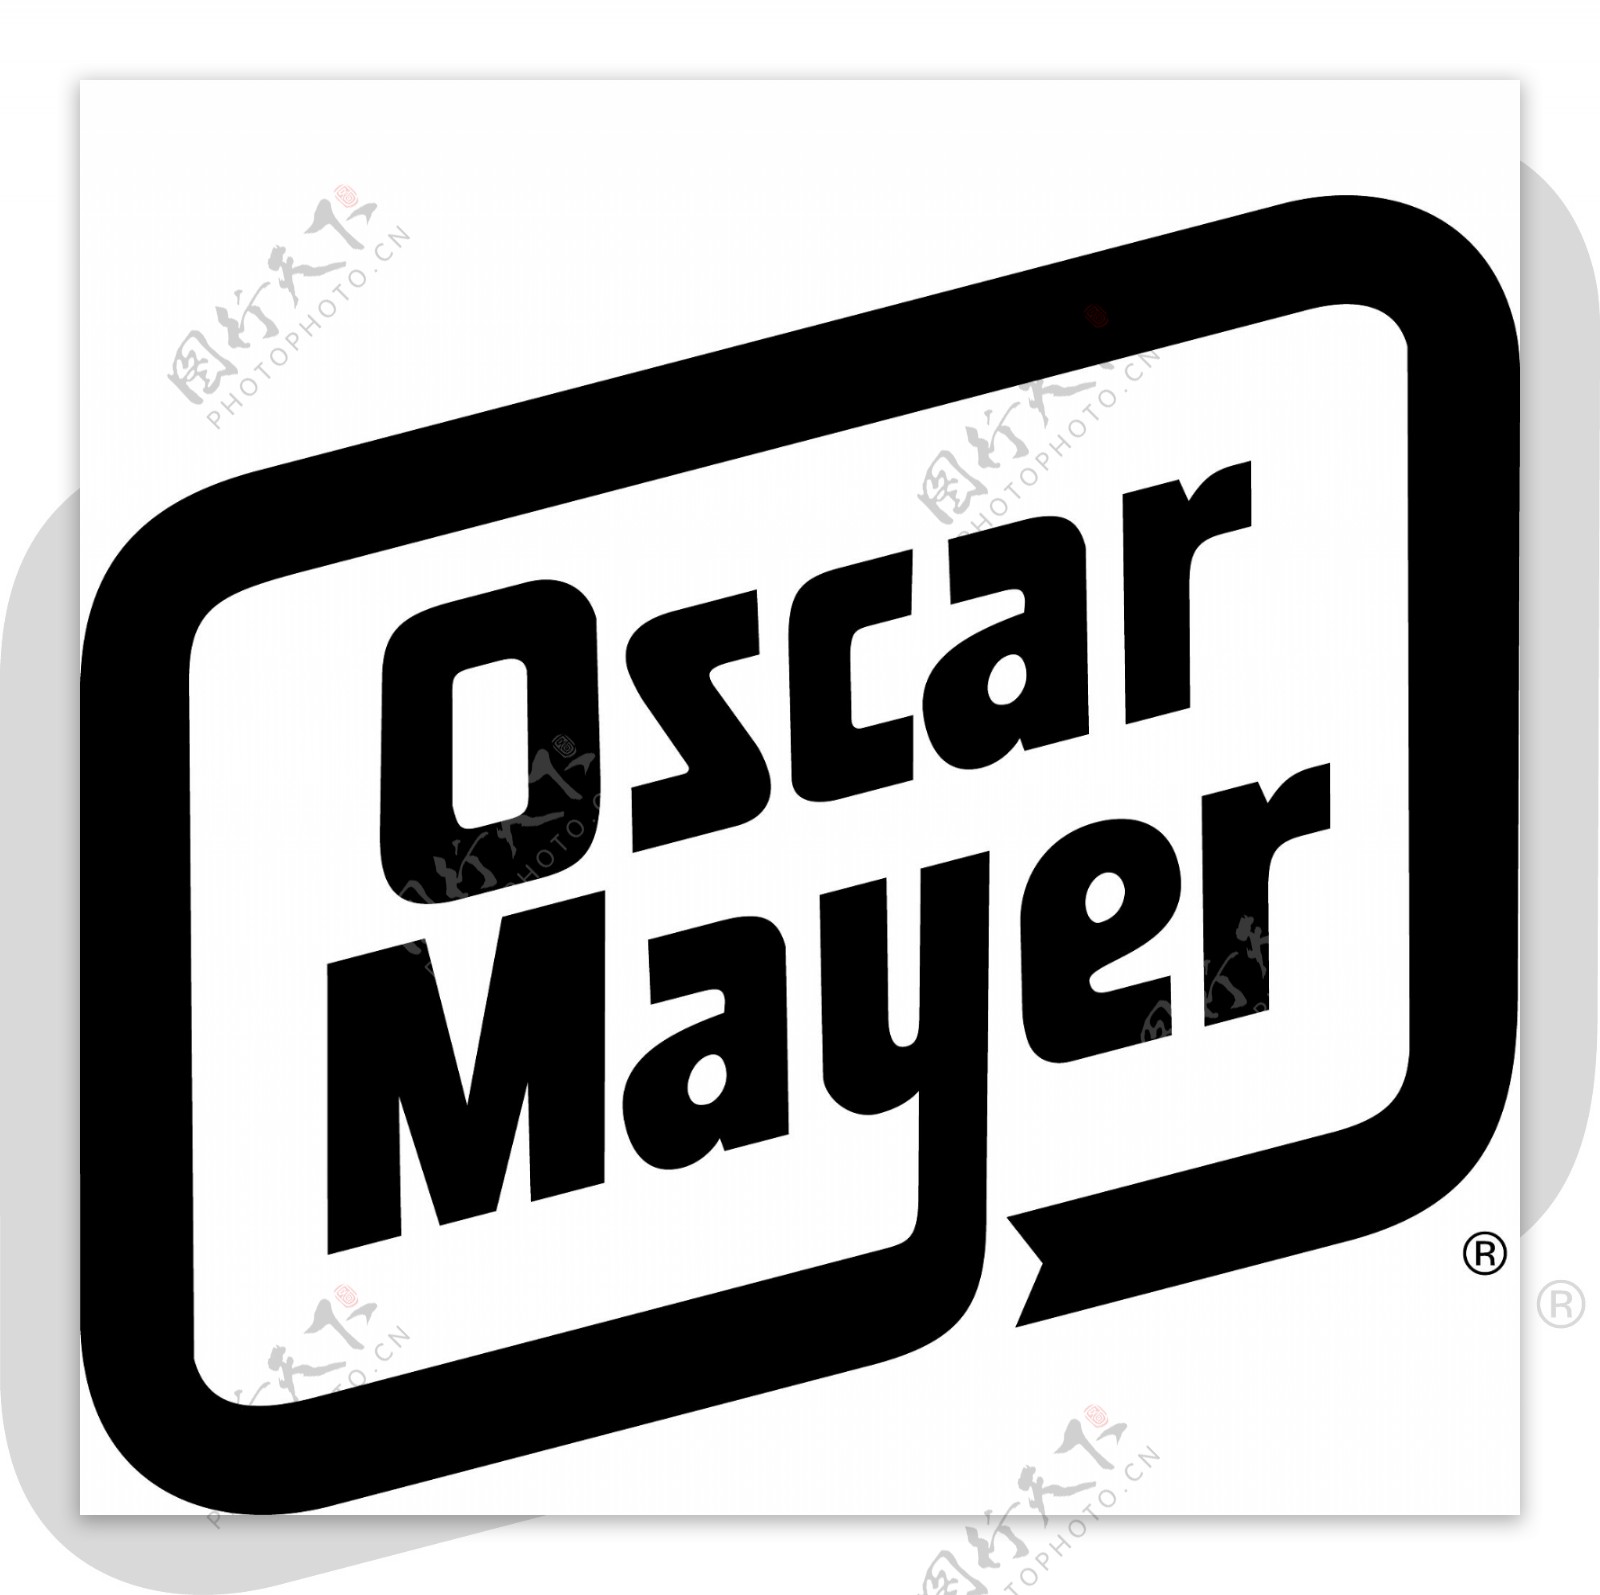 奥斯卡Mayer标志